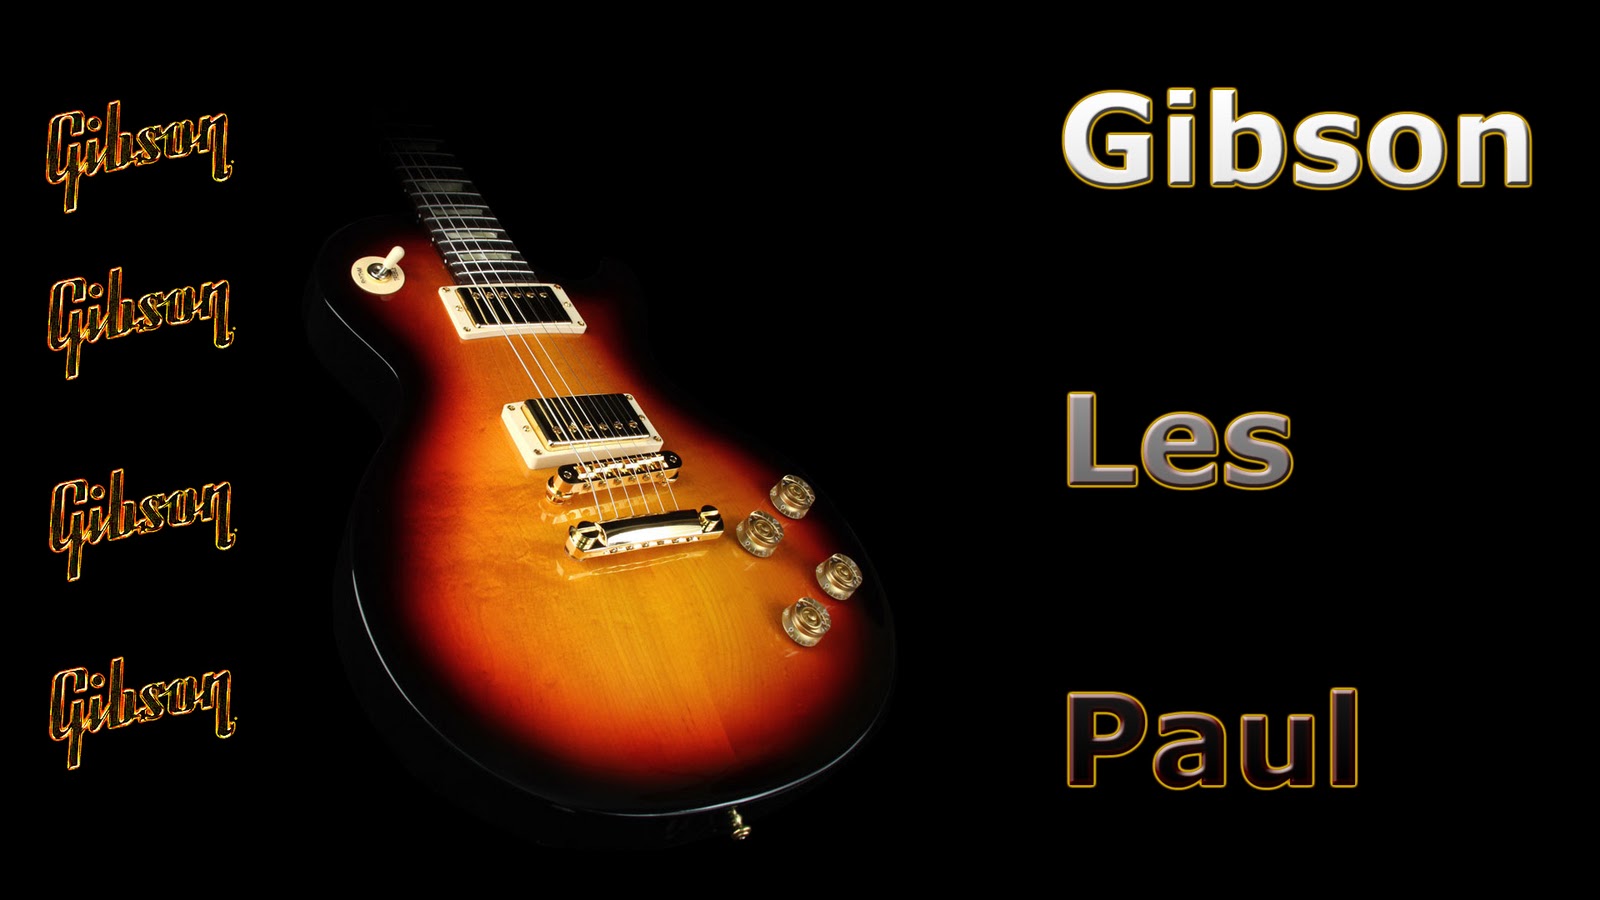 https://blogger.googleusercontent.com/img/b/R29vZ2xl/AVvXsEh4Lbf_bhZZry1rbzd6ZE_gWC3YzWbs7NHfGz2GAhpYxV0SVdBLRINVa76DzU2dUeyG8iRY00il8hSVkei9VbgFA460YaAcnFkzP39Uf0f3ybsBXhzHhv9rXMTaX8cc_-JQr-5EDIW8FaC-/s1600/Vintage+Gibson+Les+Paul+Electric+Guitar+Fireburst+Gold+Hardware+HD+Guitar+Music+Desktop+Wallpaper+1920x1080+Great+Guitar+Sound+www.GreatGuitarSound.Blogspot.com.jpg